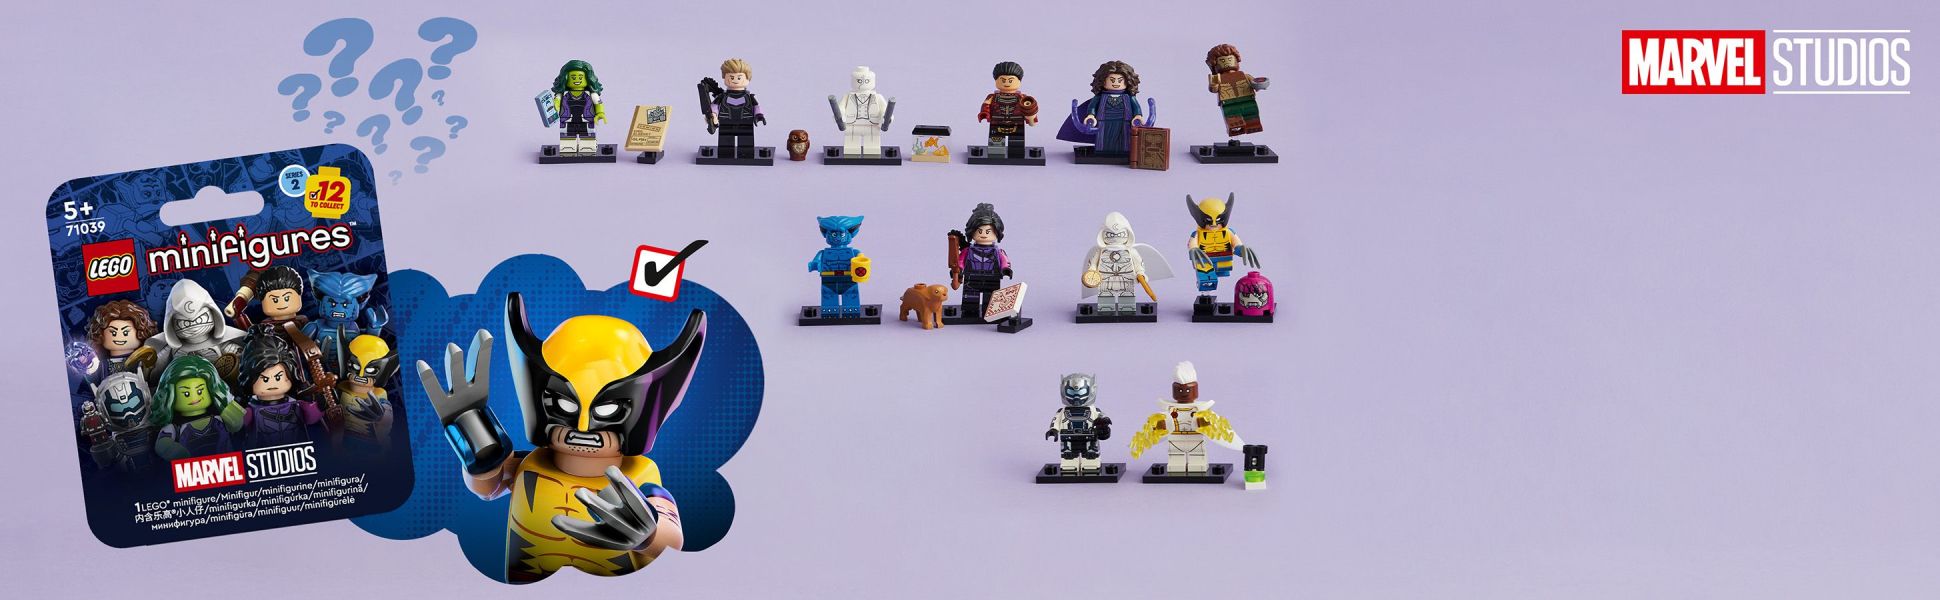 DISNEY LEGO MARVEL : Series 2 | Minifigures 71039 Wolverine, Storm You  Pick!!